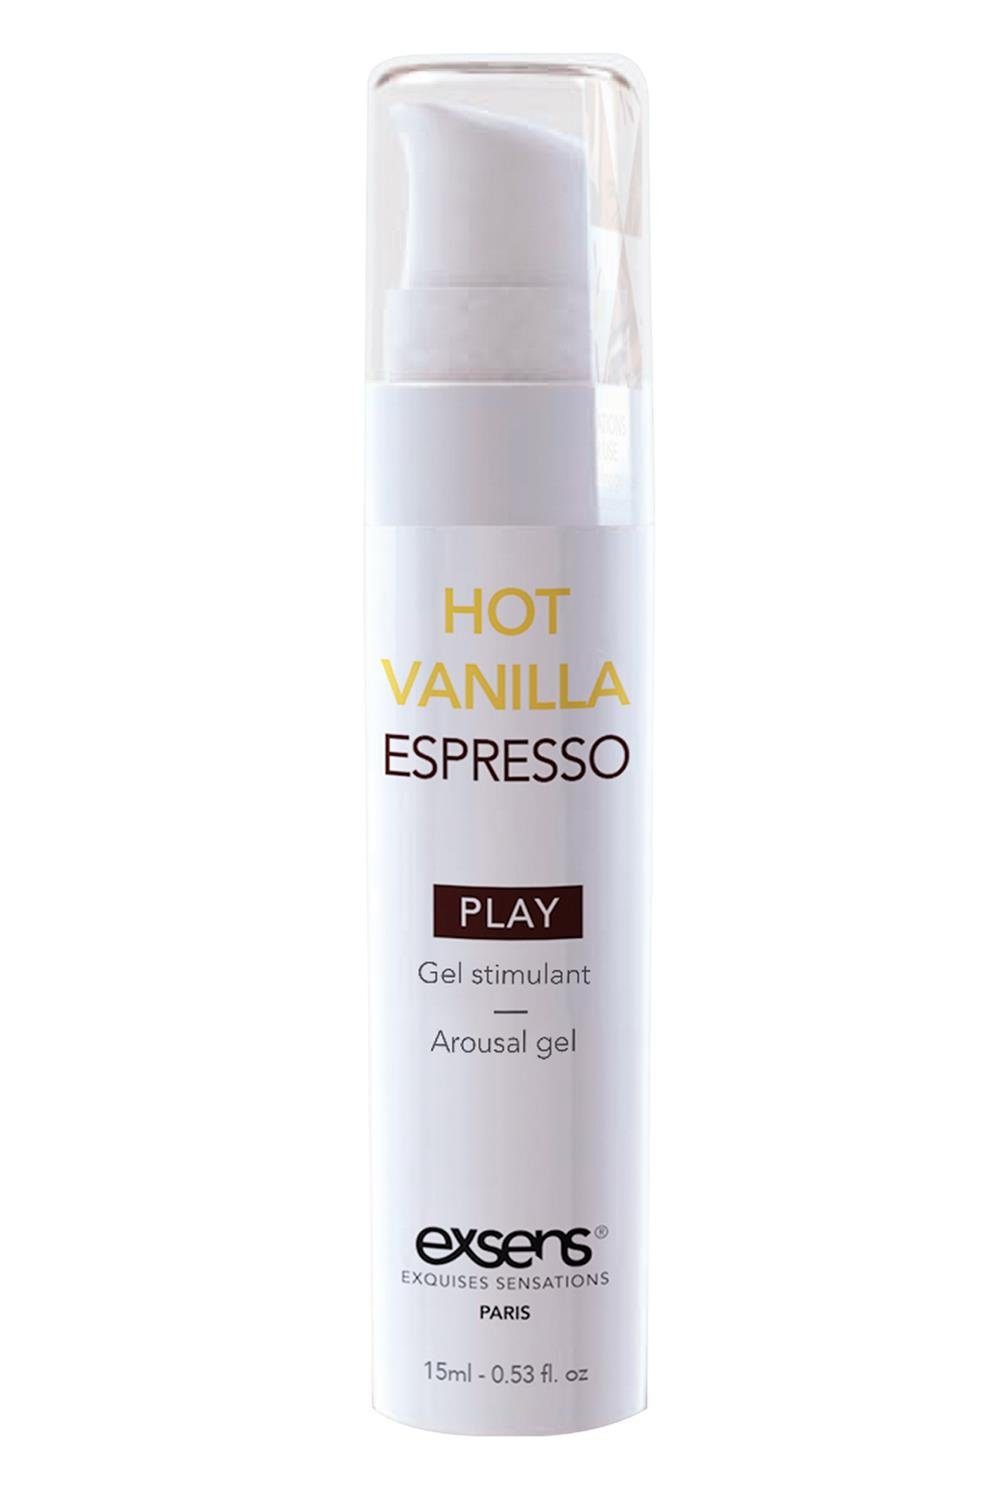 Exsens Gleit- und Massagegel Exsens Arousal Gel Hot Vanilla Espresso 15ml, Fast sofortiger Kühleffekt